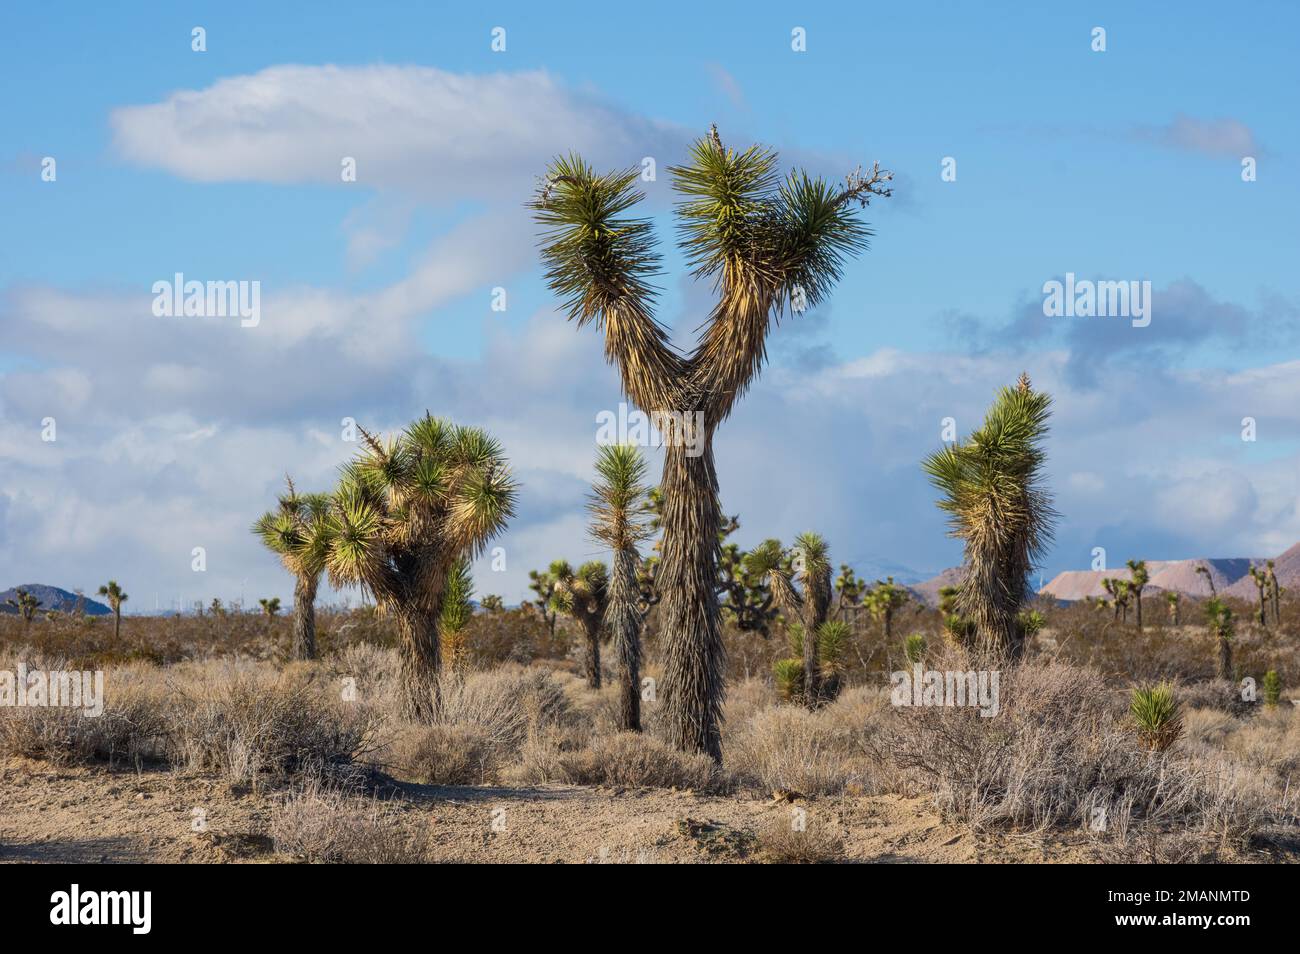 Joshua tree forest shown in the Mojave Desert in Kern County, California. Stock Photo